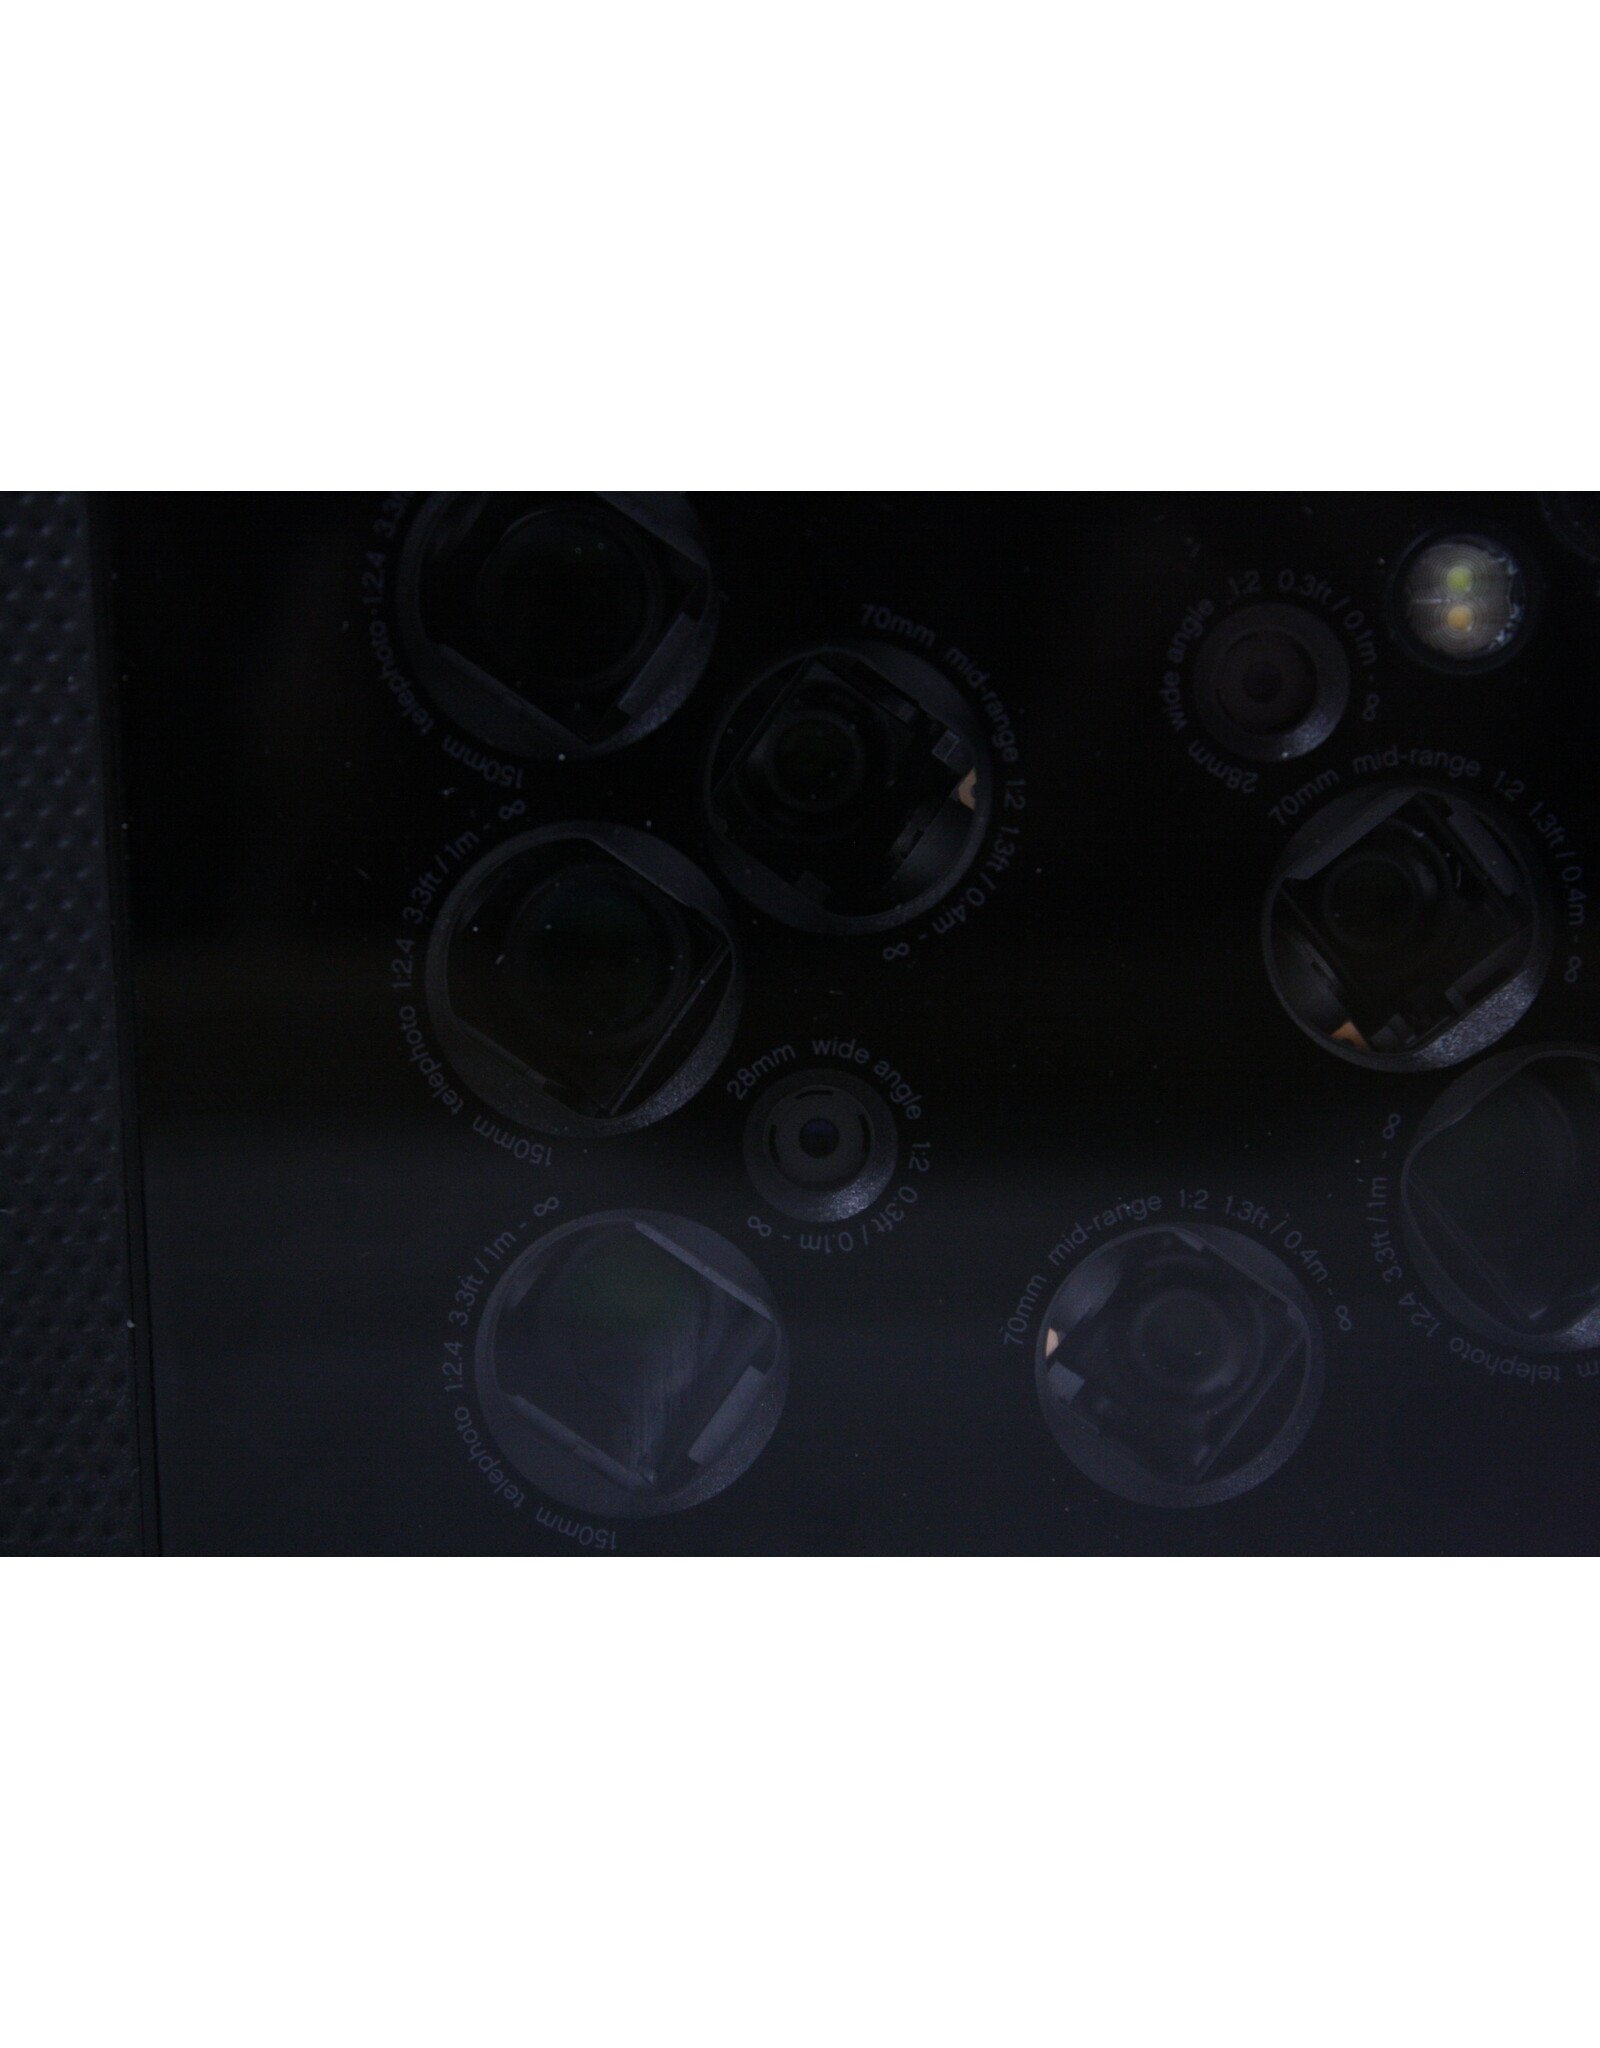 Light Camera L16 51.1MP 16 Lenses & Sensors 8256 x 6192 MINT Condition NEW IN BOX